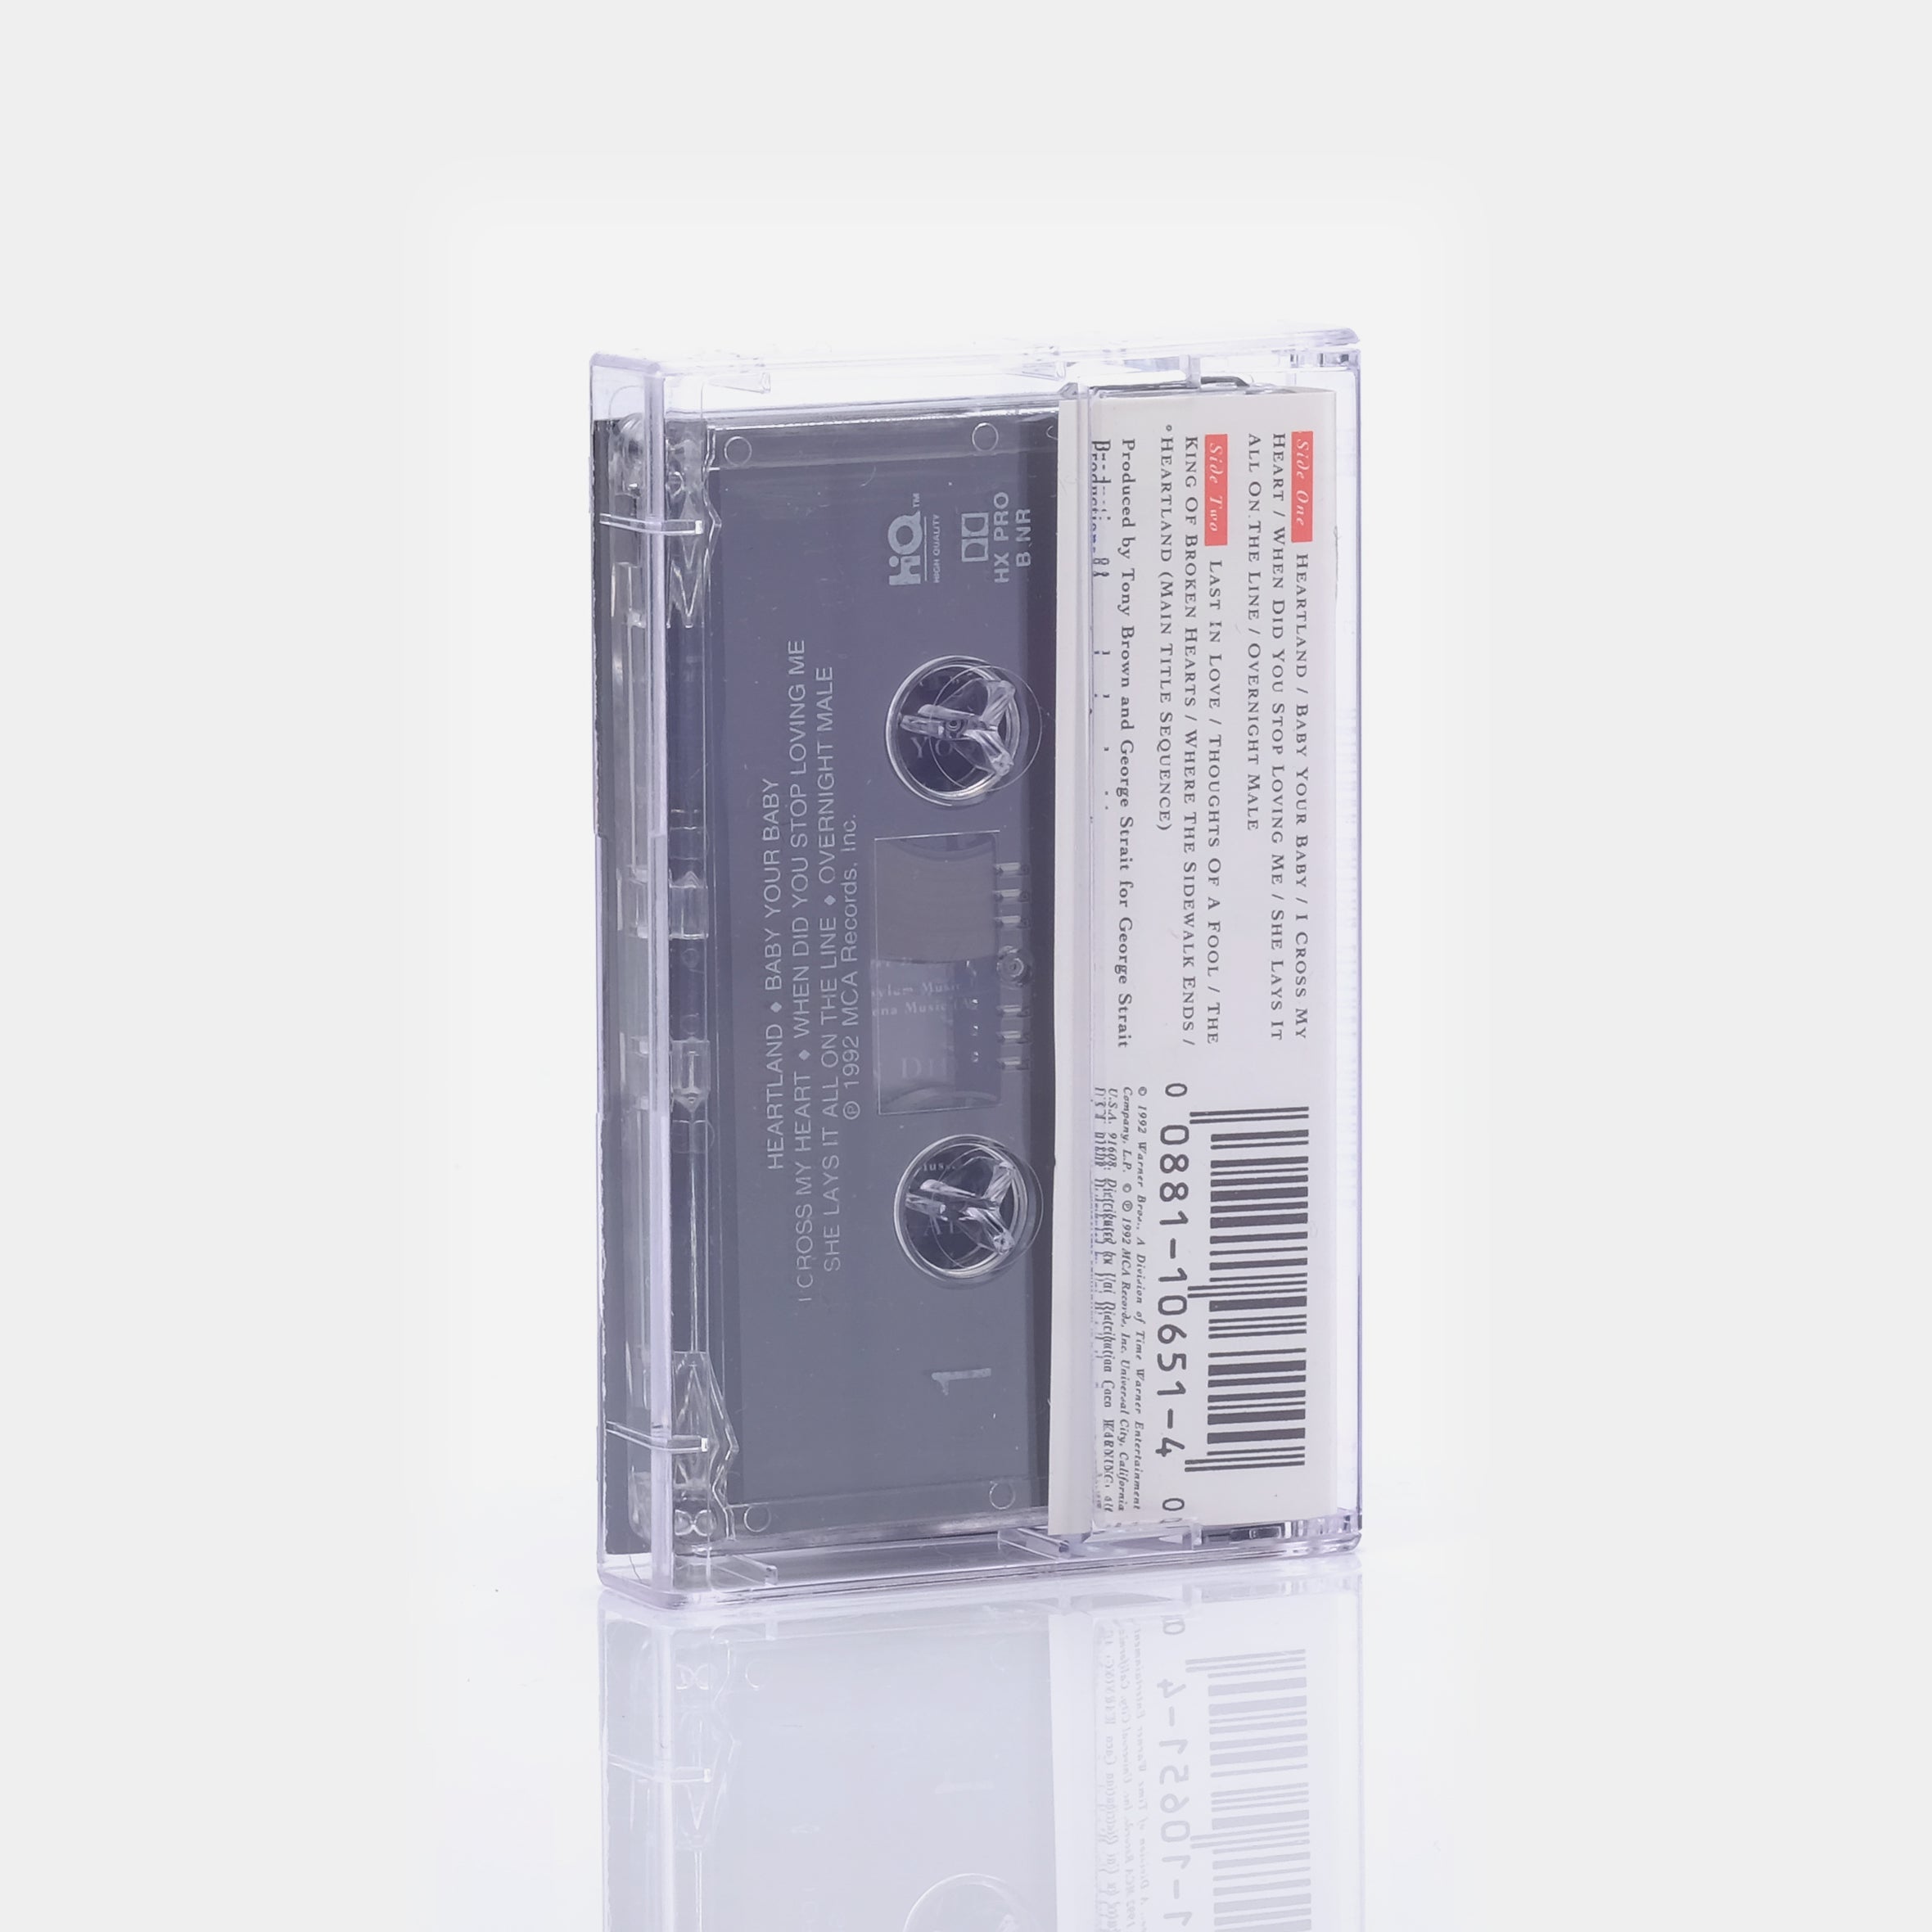 George Strait - Pure Country (Original Motion Picture Soundtrack) Cassette Tape